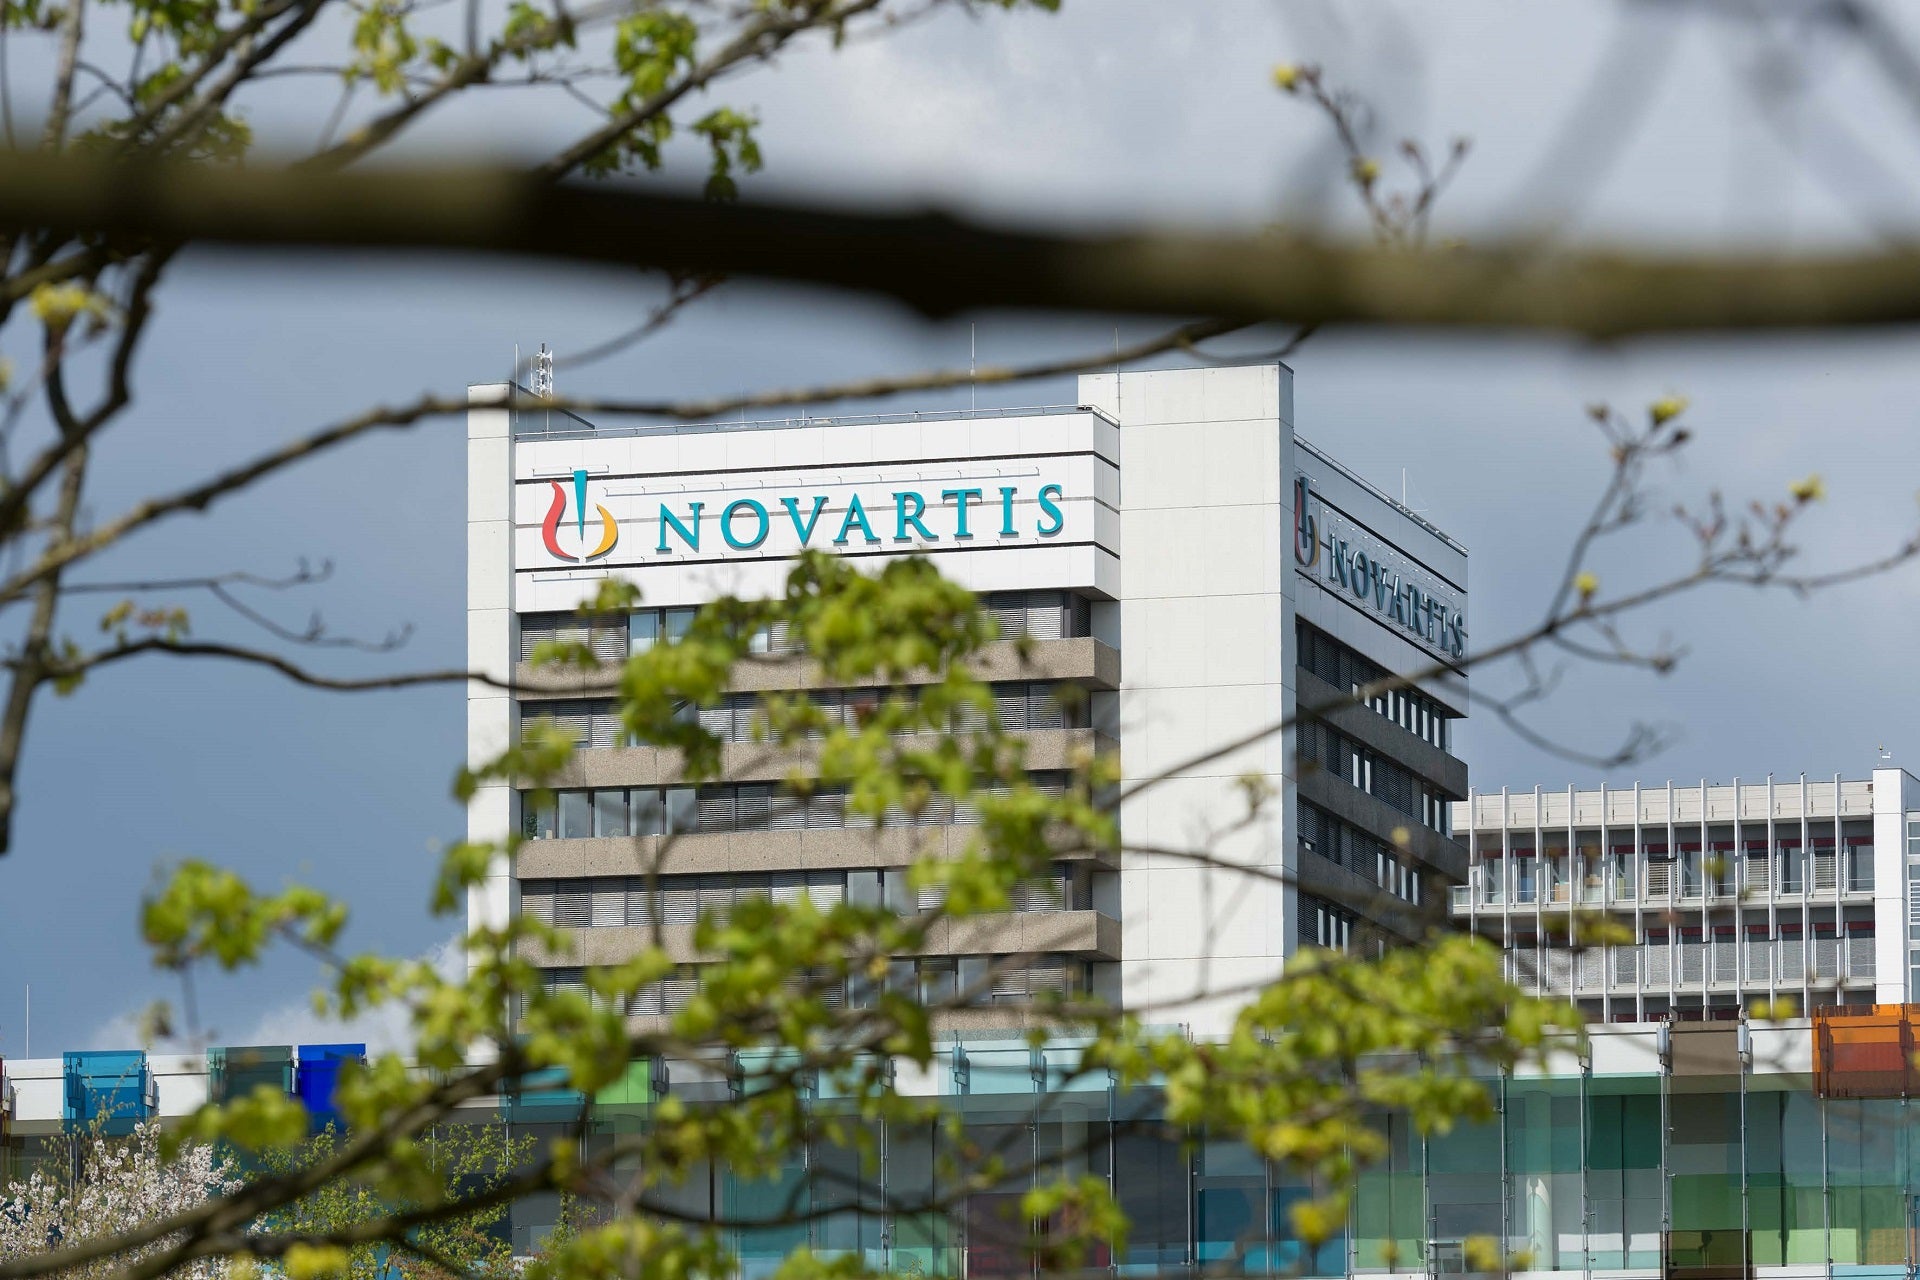 Novartis unveils positive data from studies of Zolgensma to treat SMA